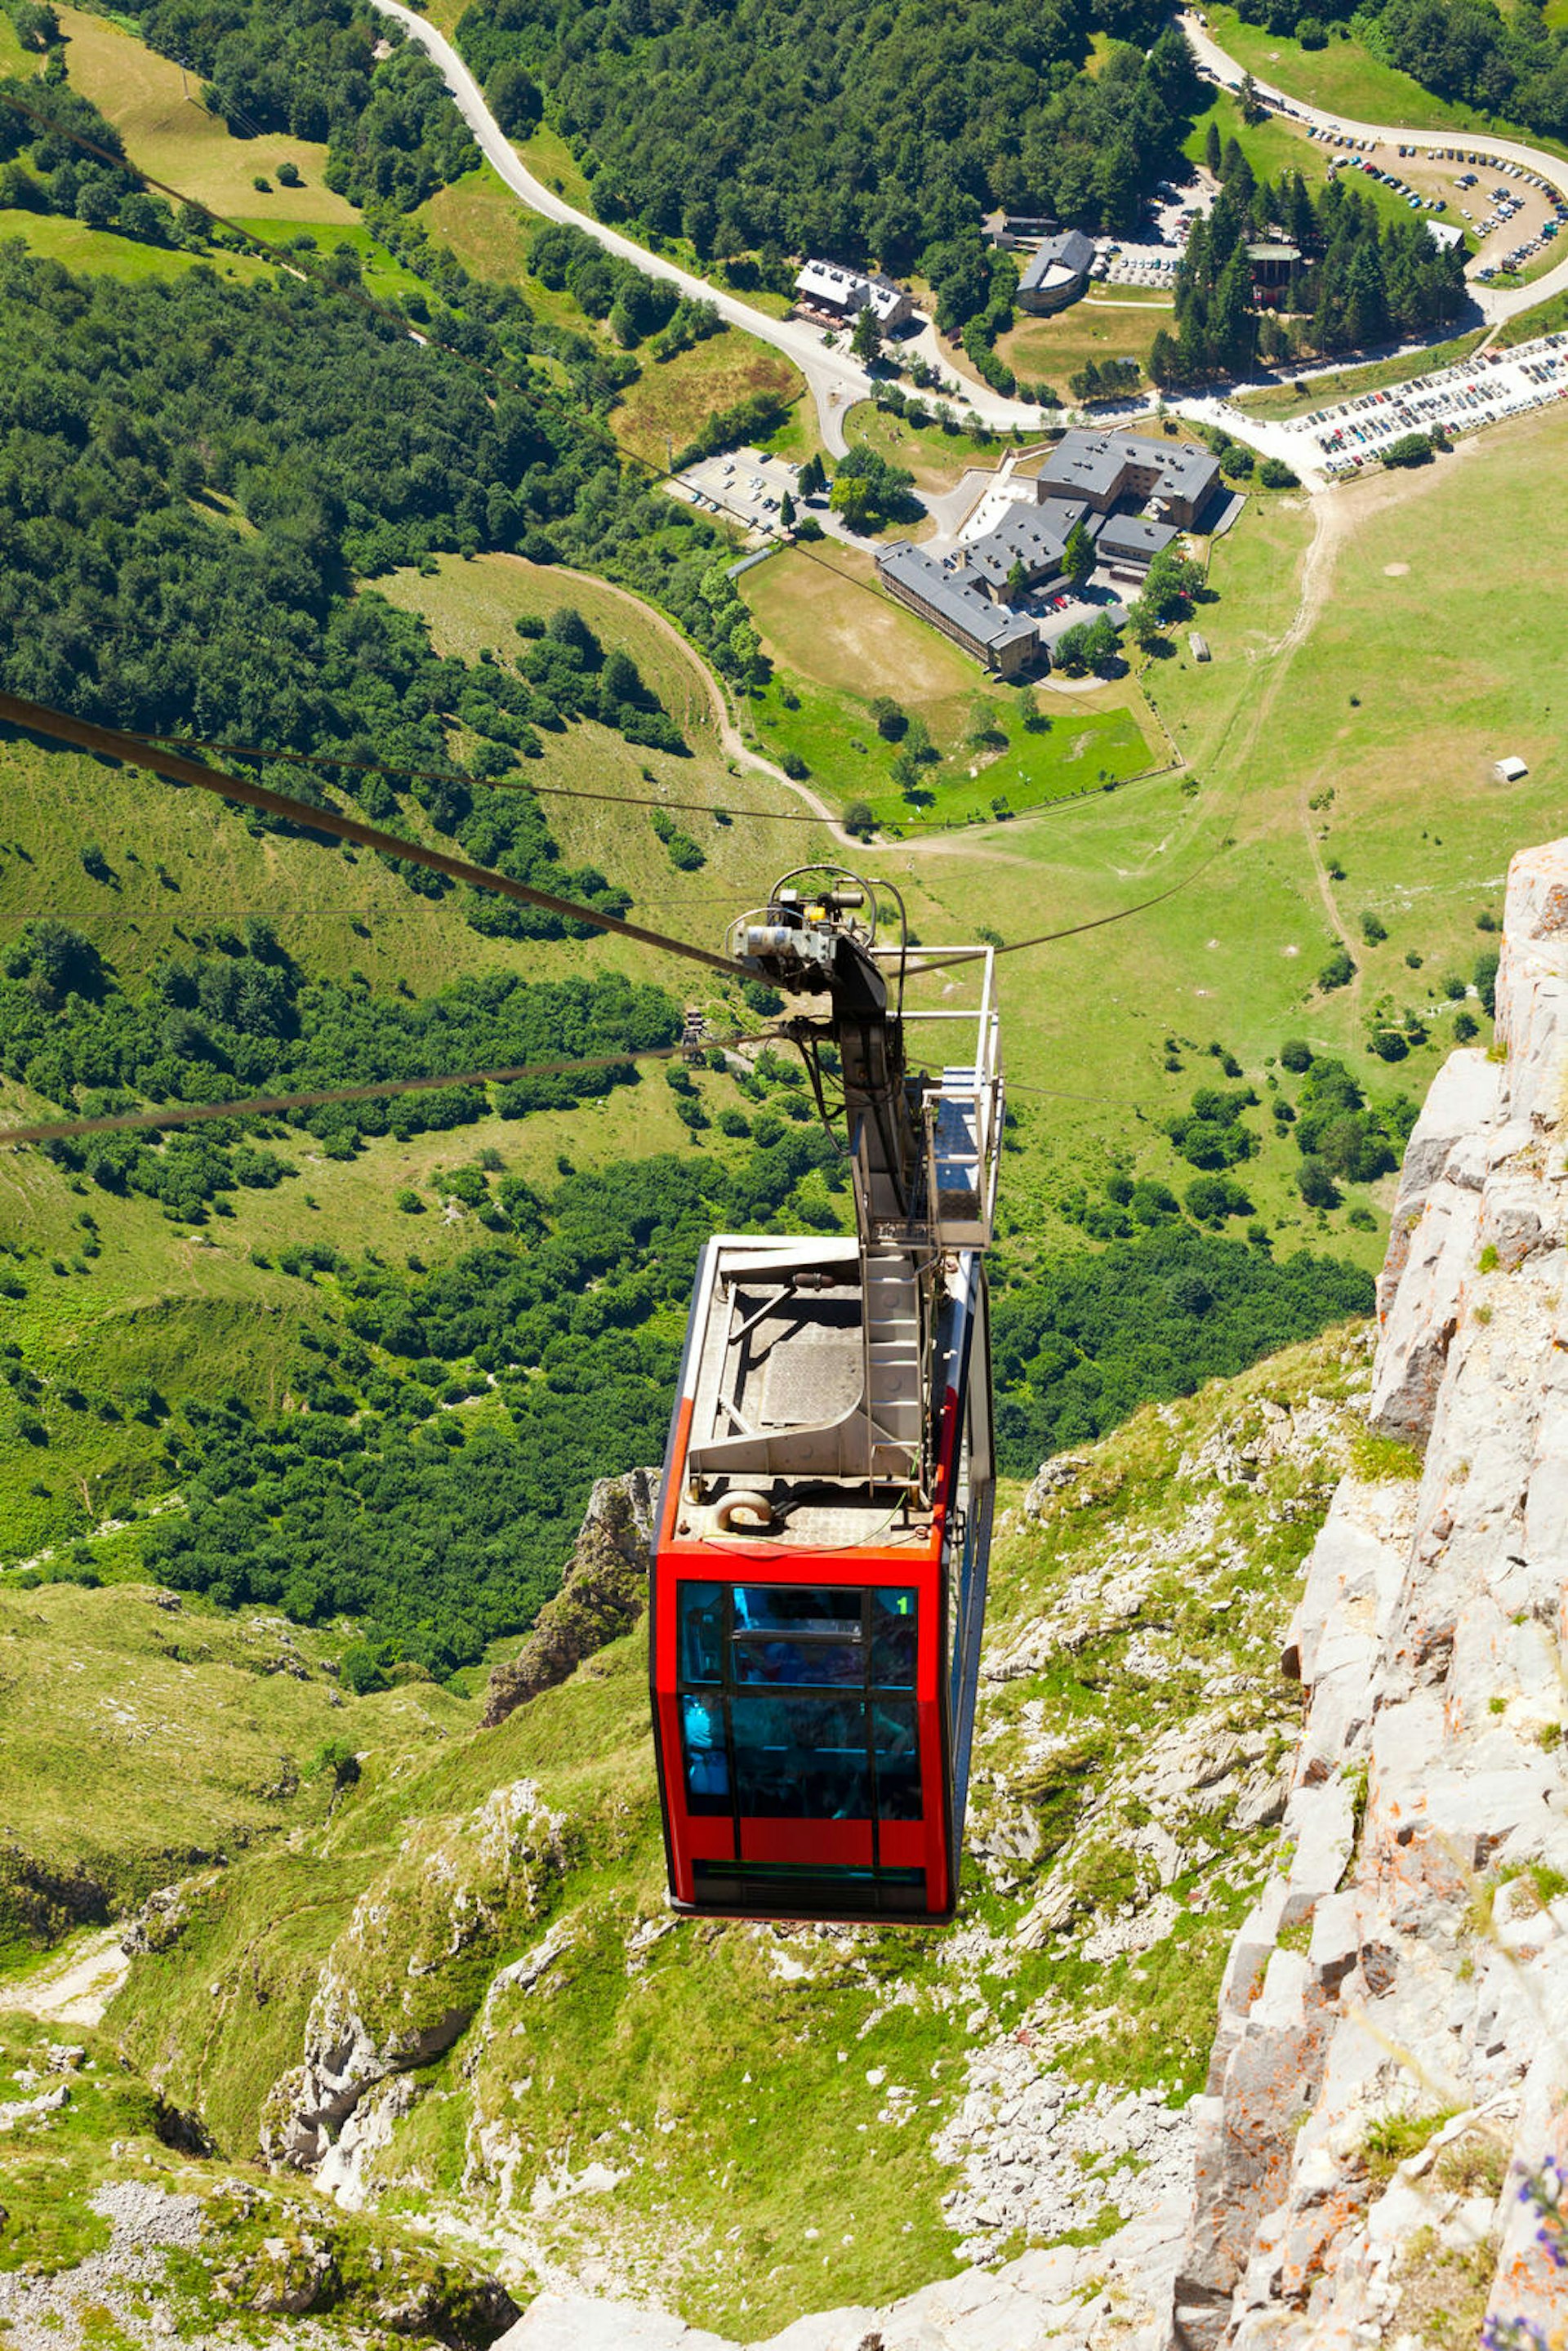 The cable car at Fuente De © Jose Ignacio Soto / Shutterstock